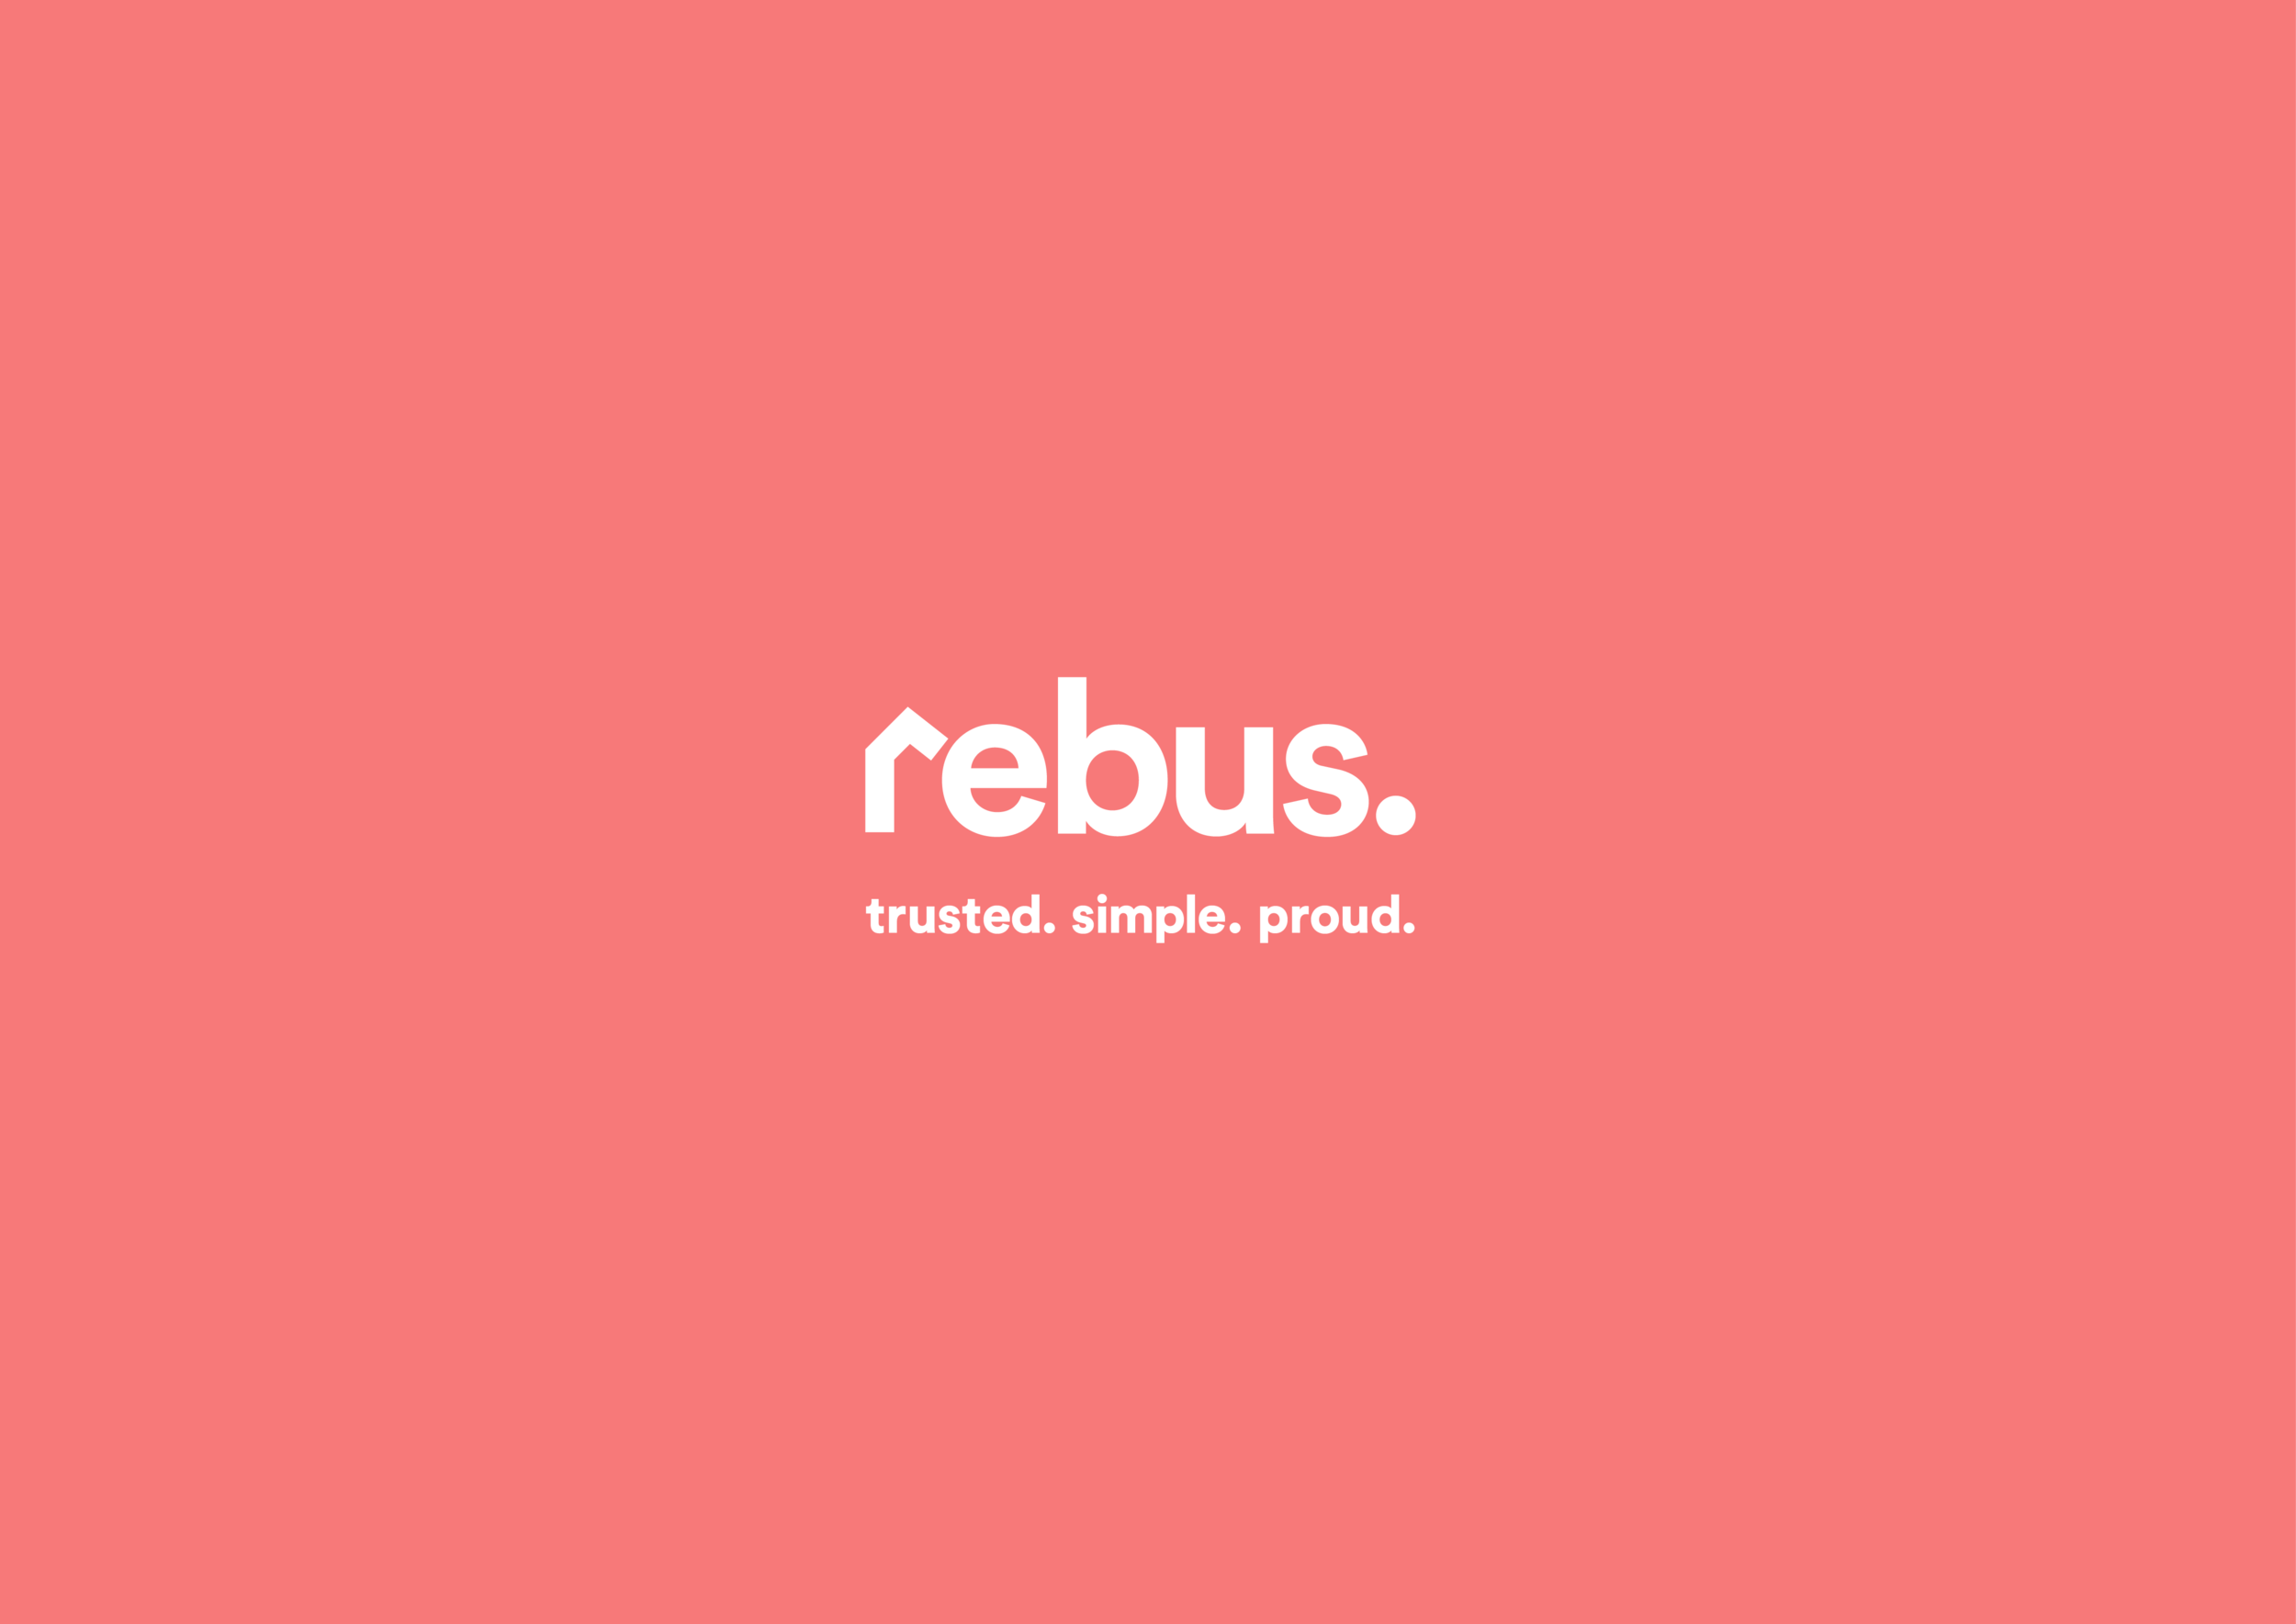 Branding company UK - rebus company font logo in grapefruit colour background